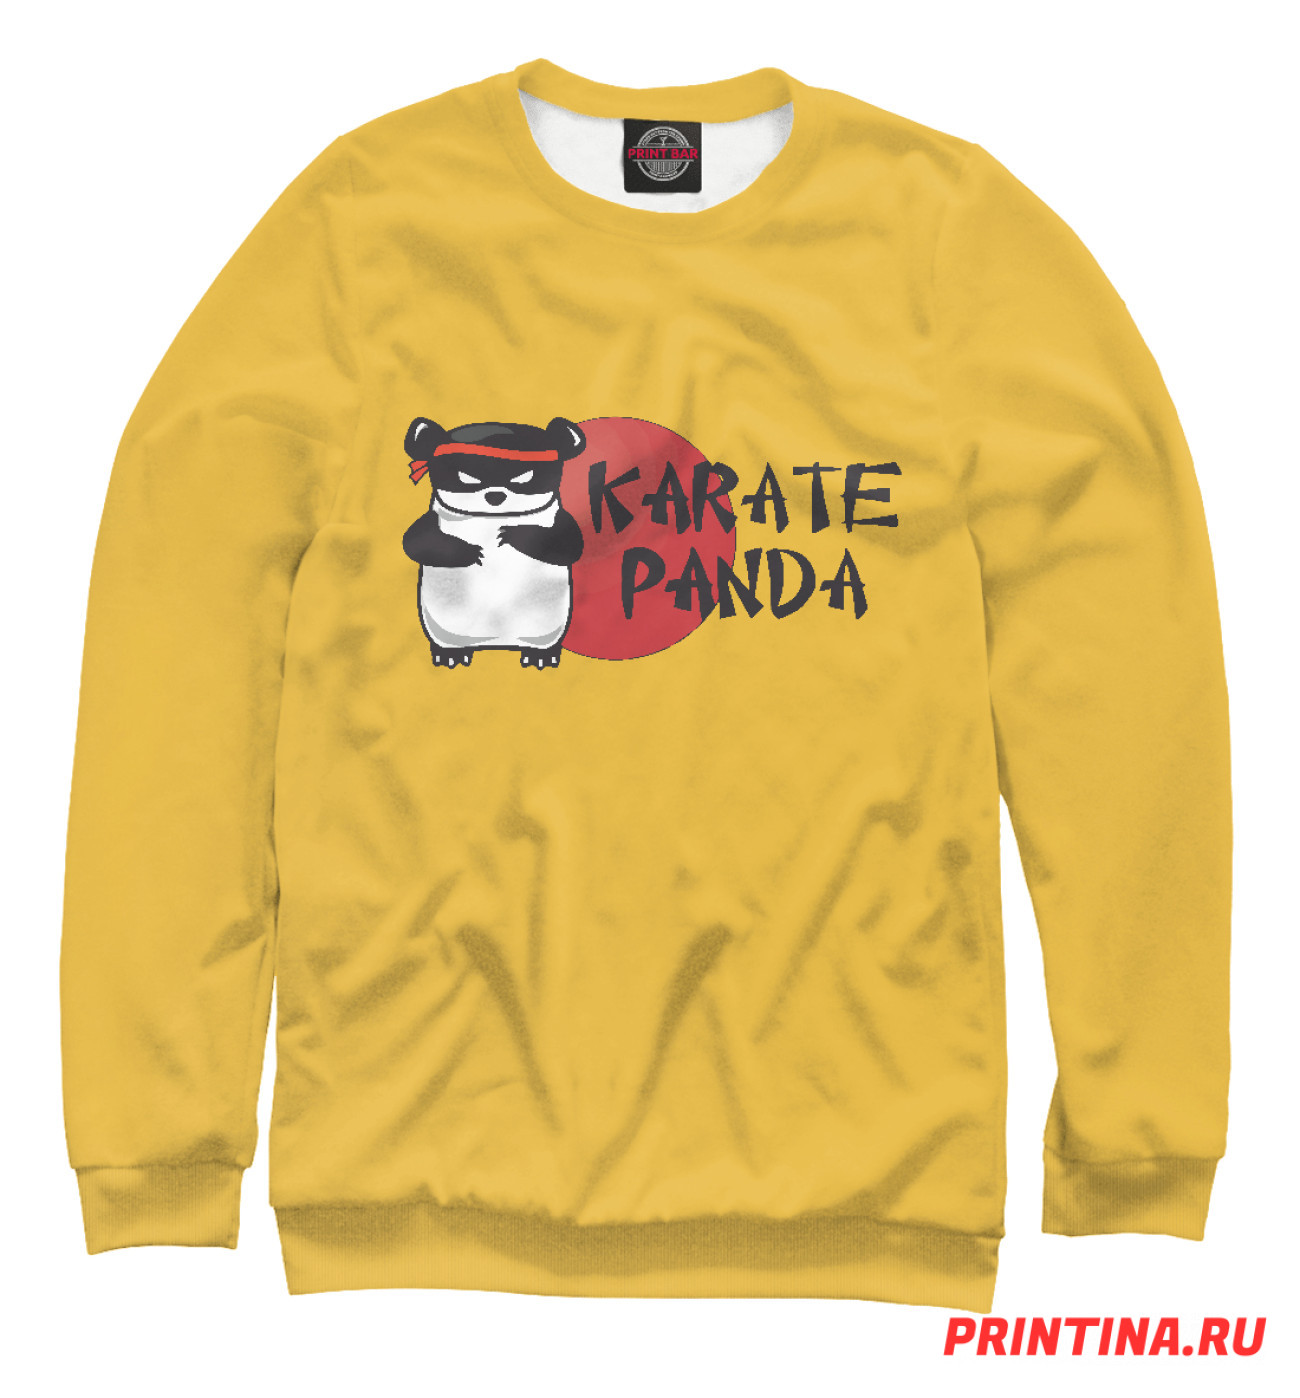 Мужской Свитшот Karate Panda, артикул: KRT-650267-swi-2